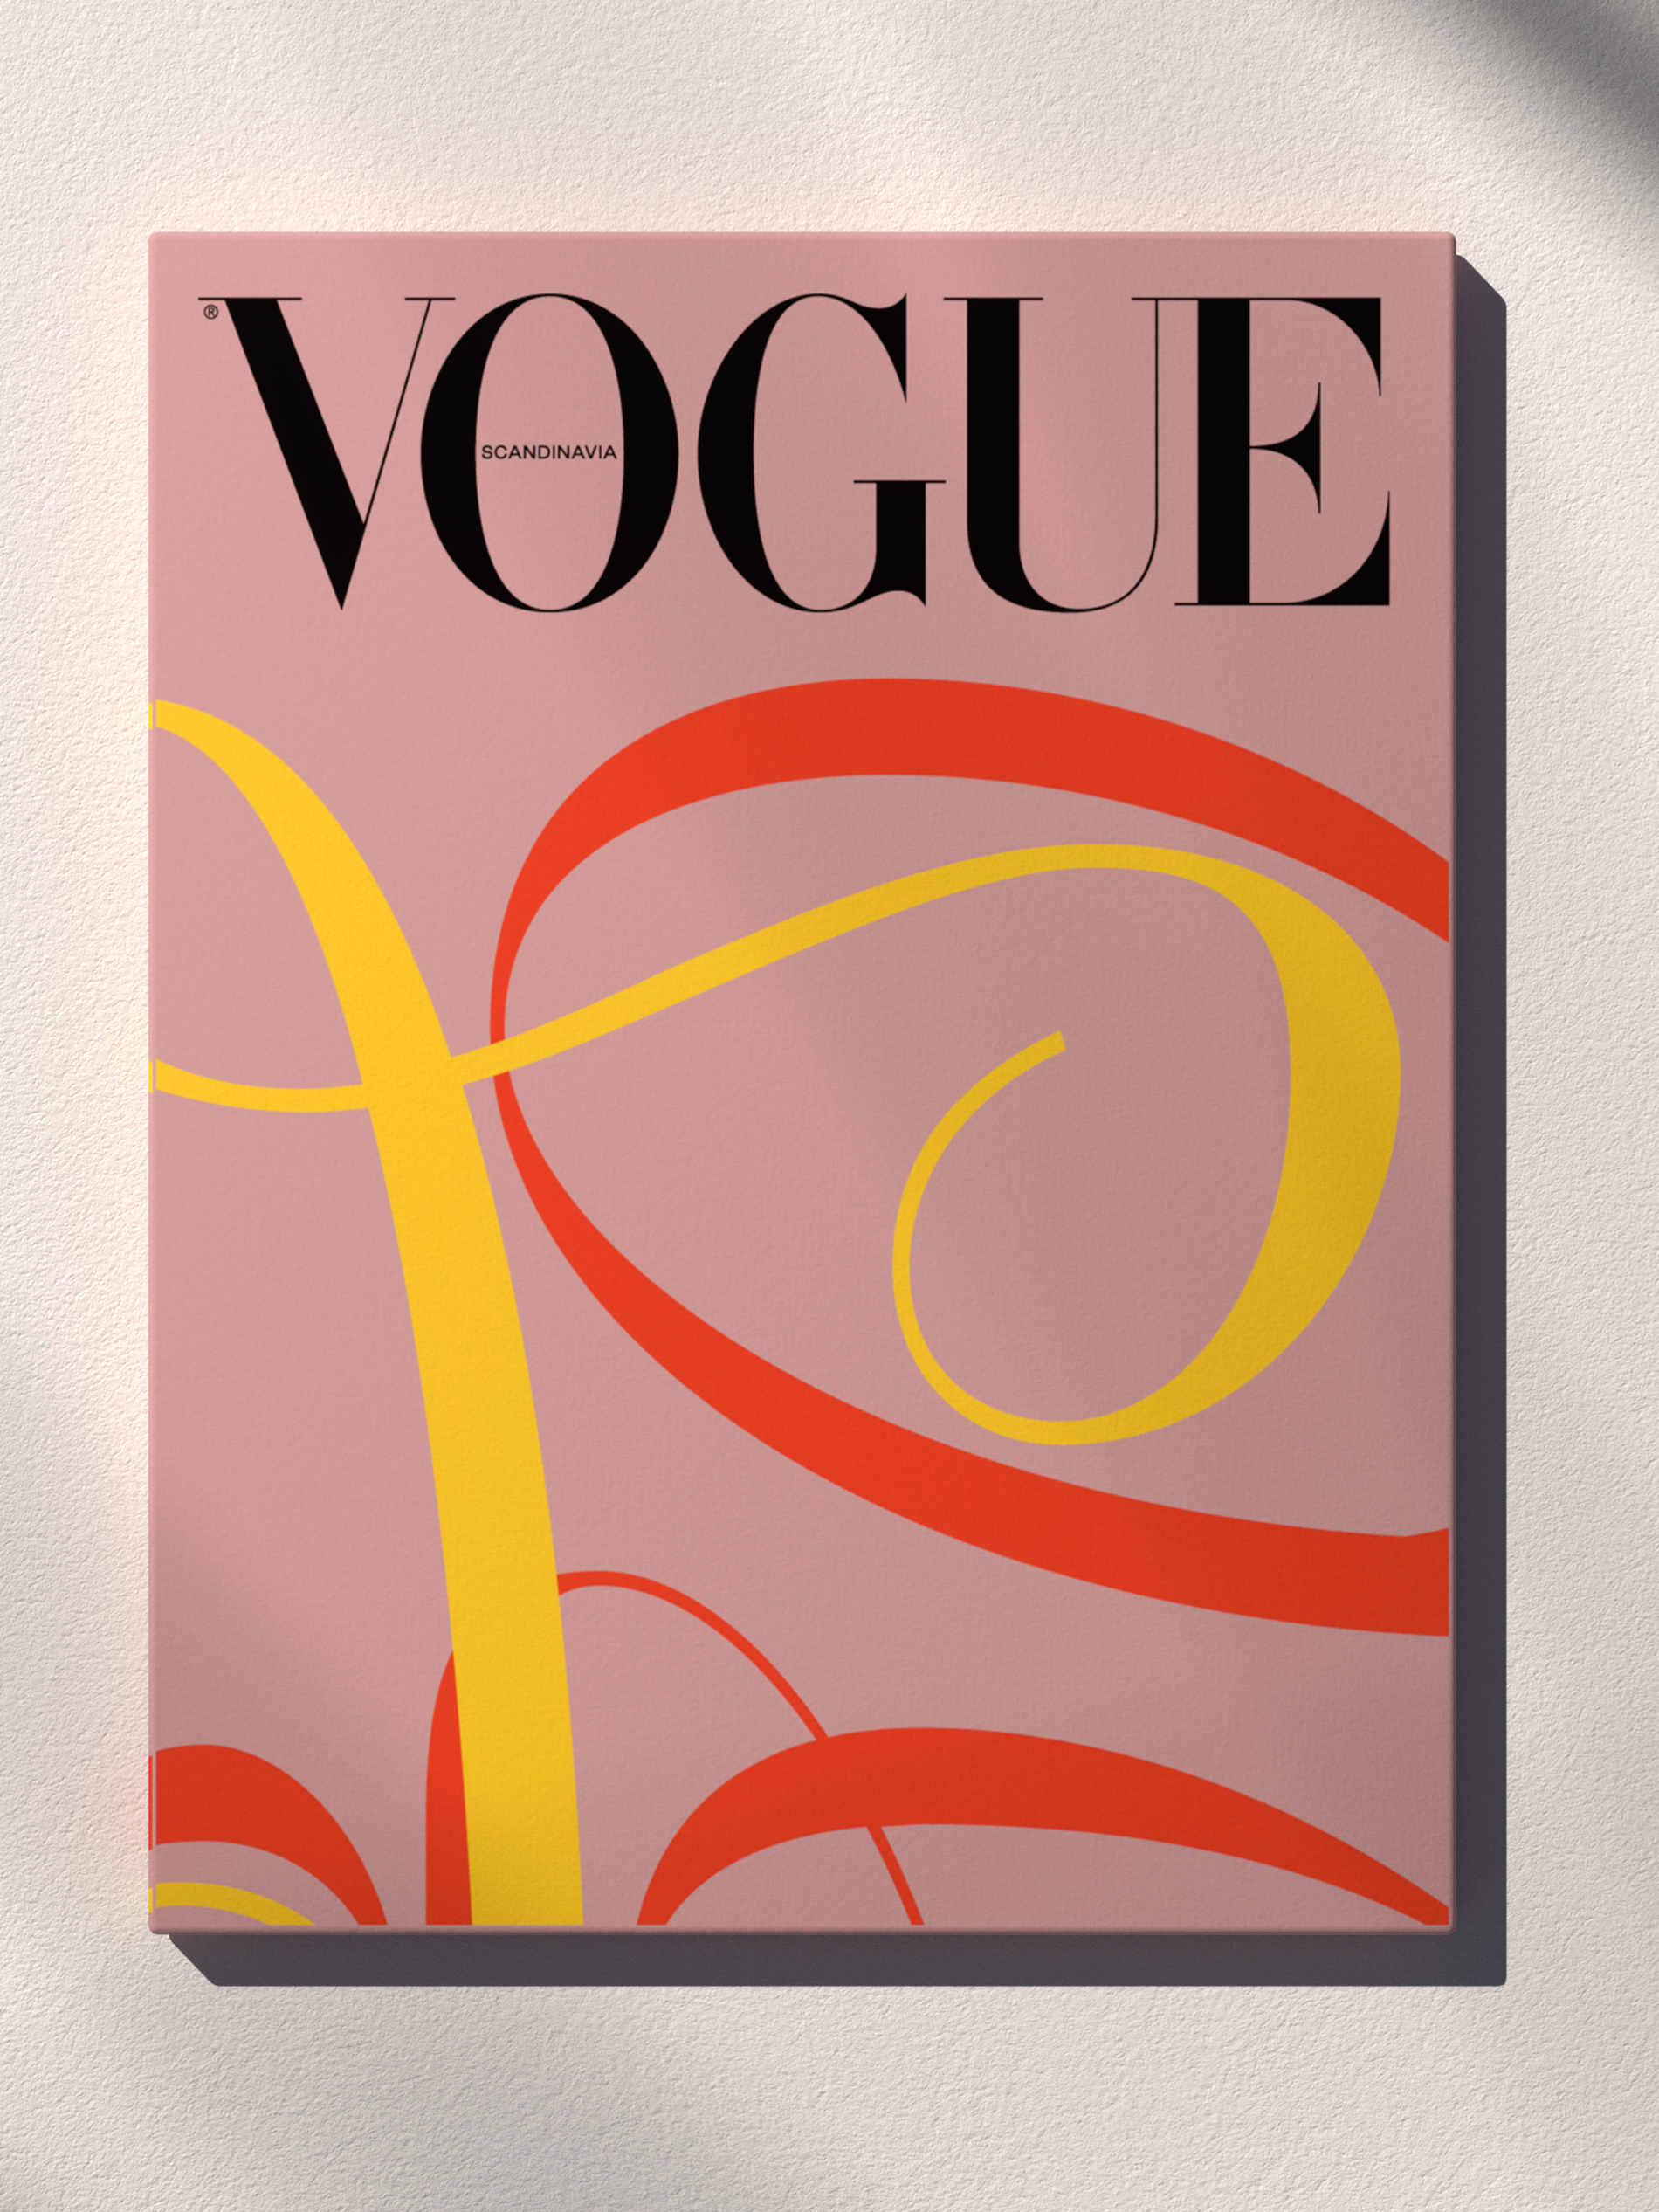 The 12 best coffee table books - Vogue Scandinavia